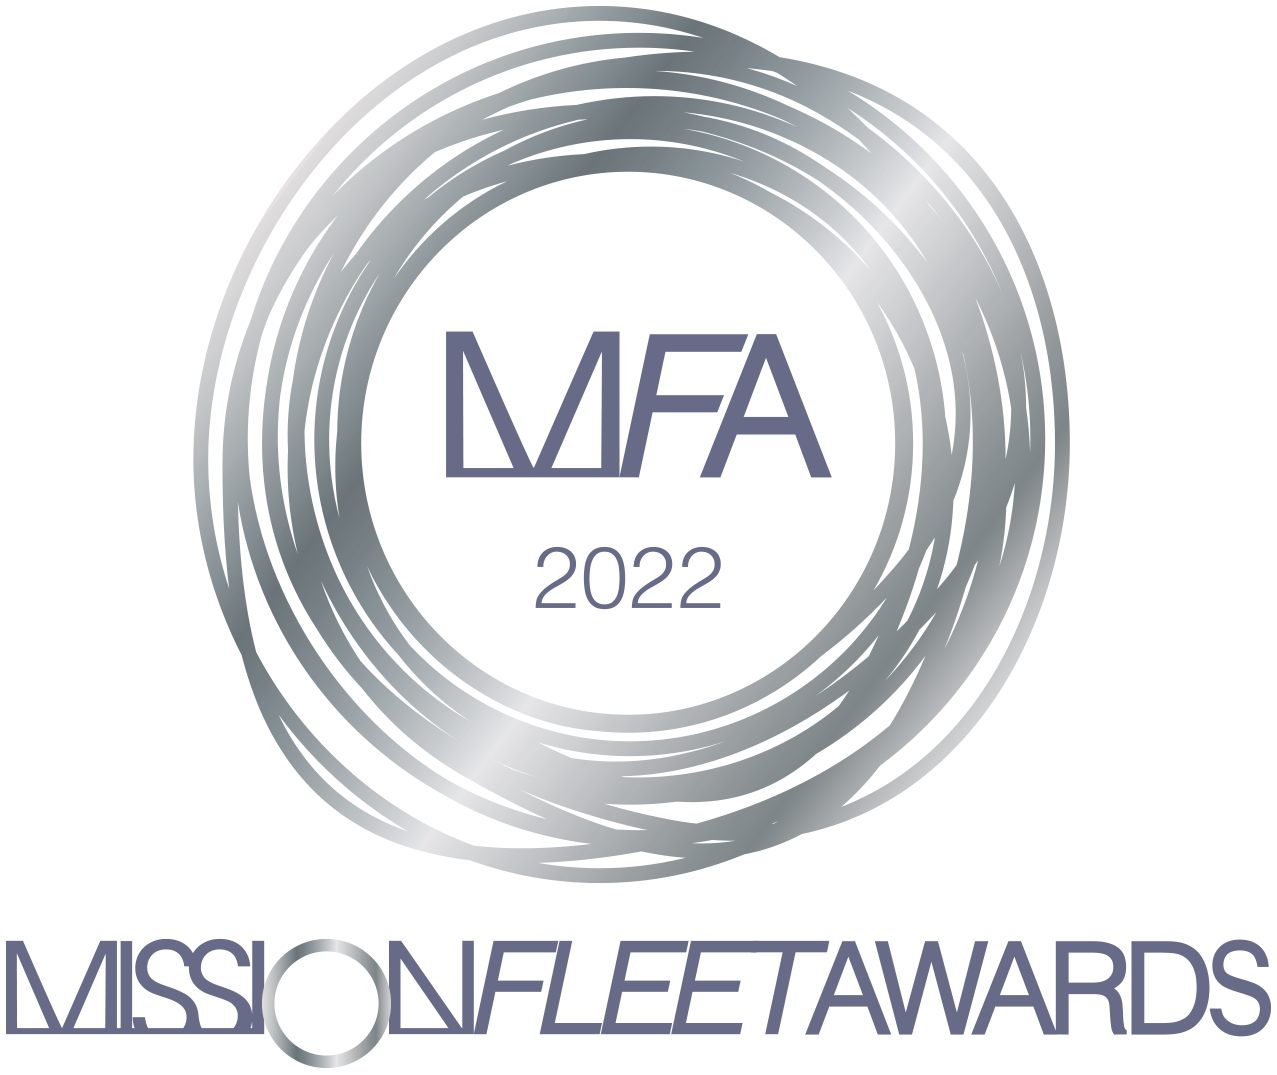 Mission fleet awards